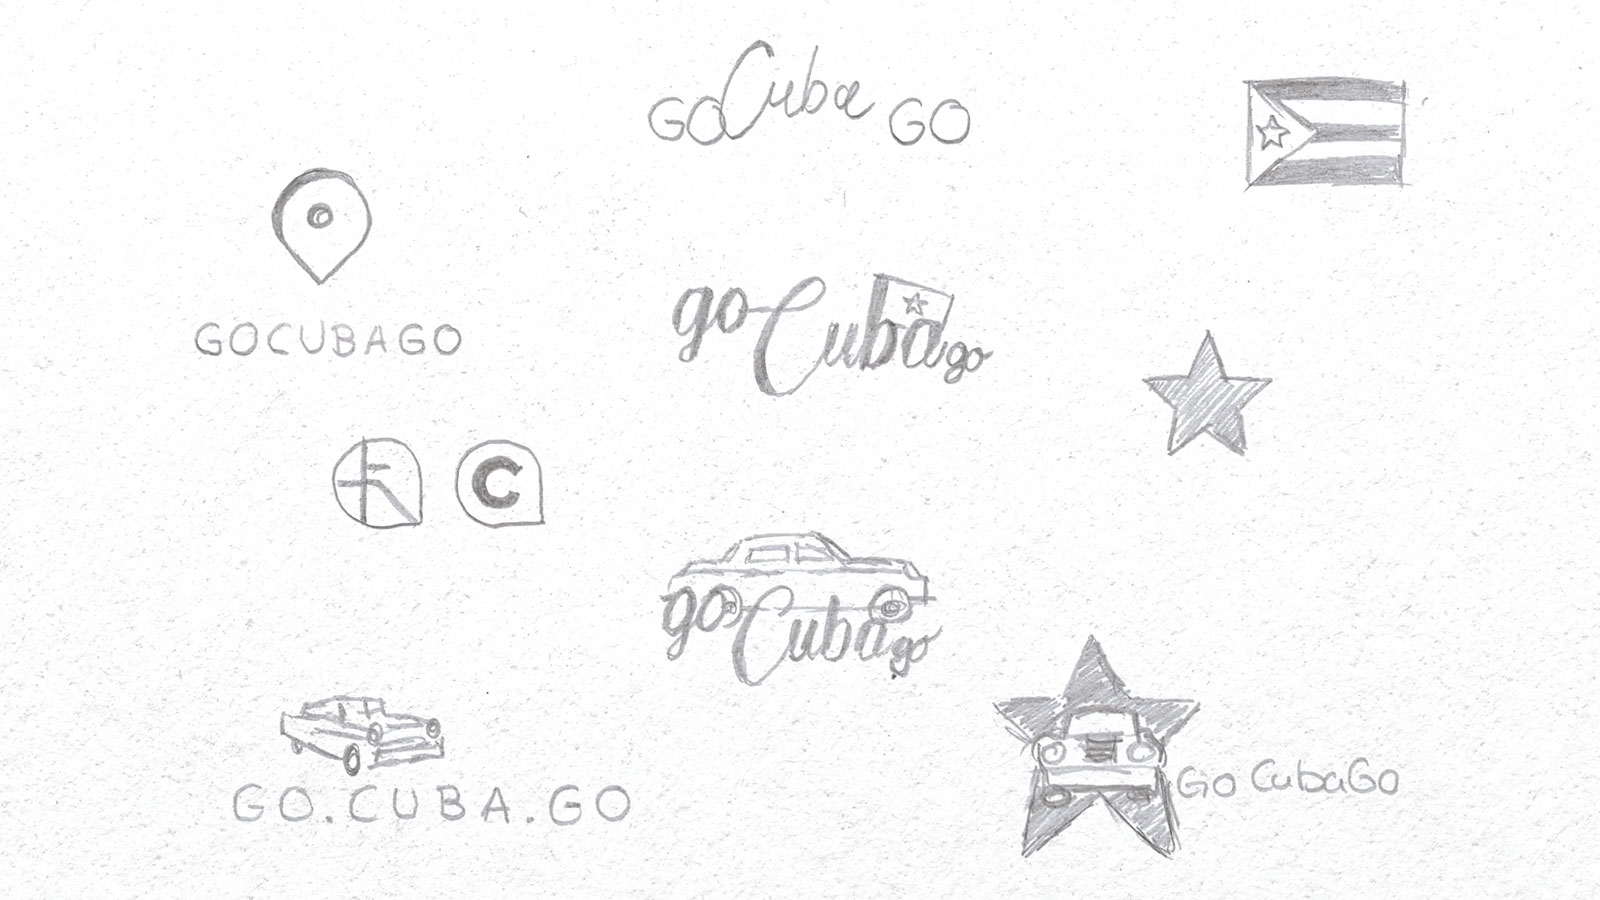 Go Cuba Go | gocubago.com | 2018 (Logo Scribble) © echonet communication GmbH